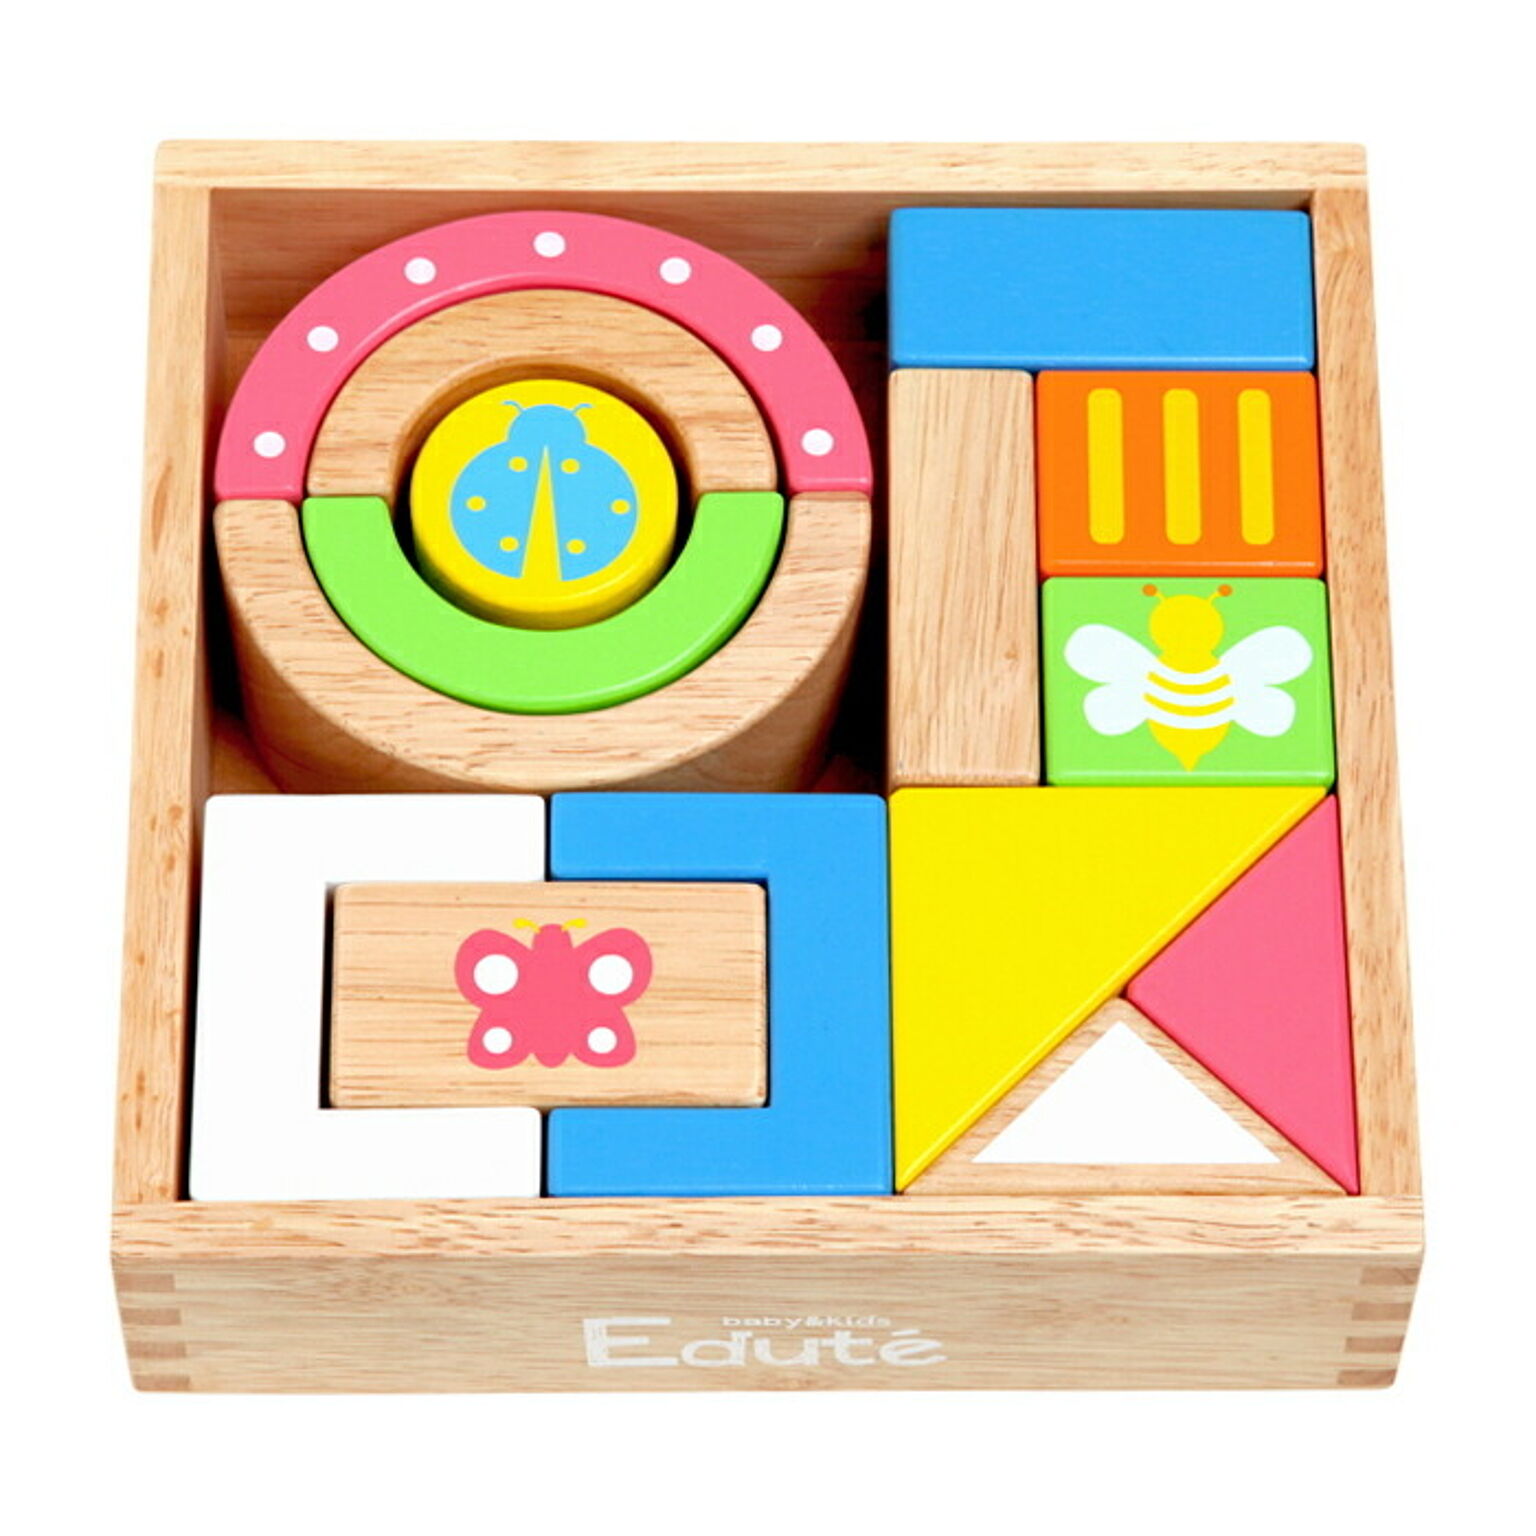 edute SOUND ブロックス おもちゃ 型はめ パズル 積み木 知育 知育玩具 1歳 音の出るおもちゃ 子供 女の子 男の子 プレゼント 安全 出産祝い ベビー 赤ちゃん